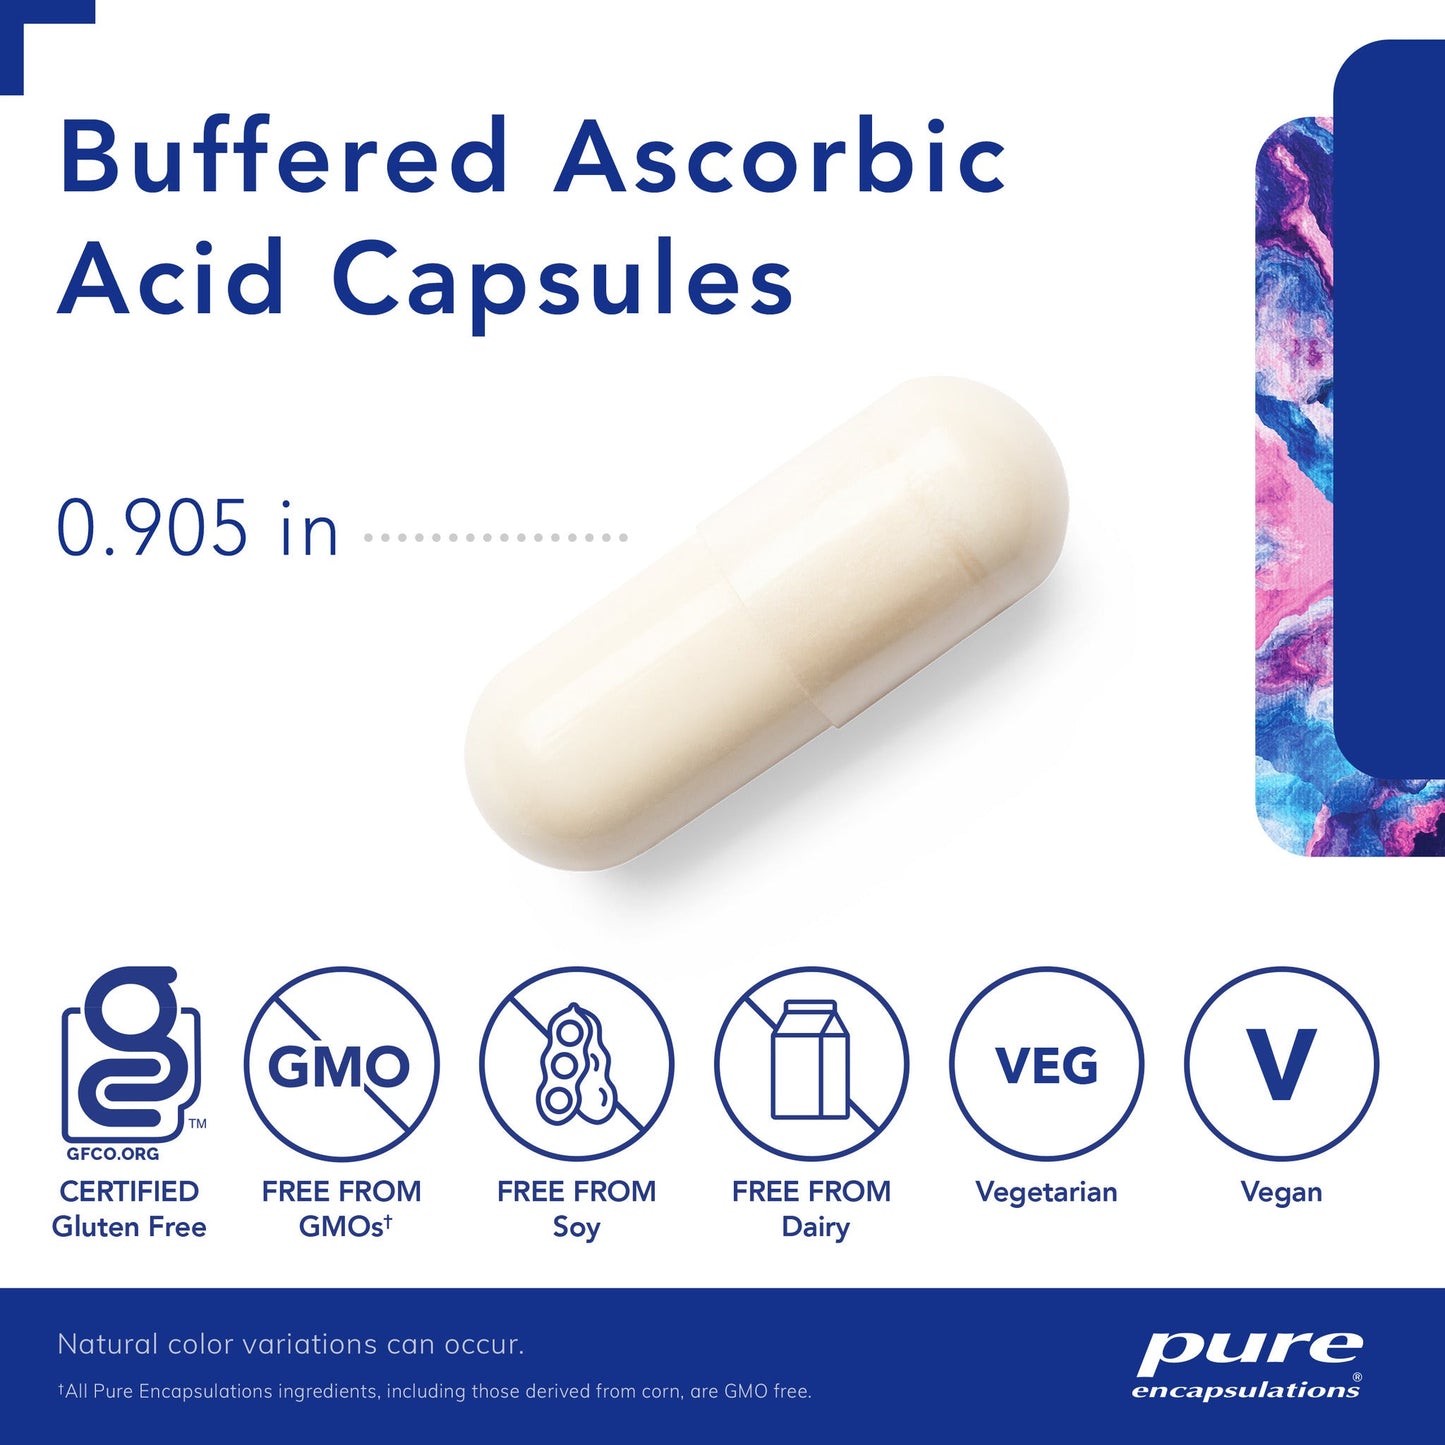 Buffered Ascorbic Acid Capsules